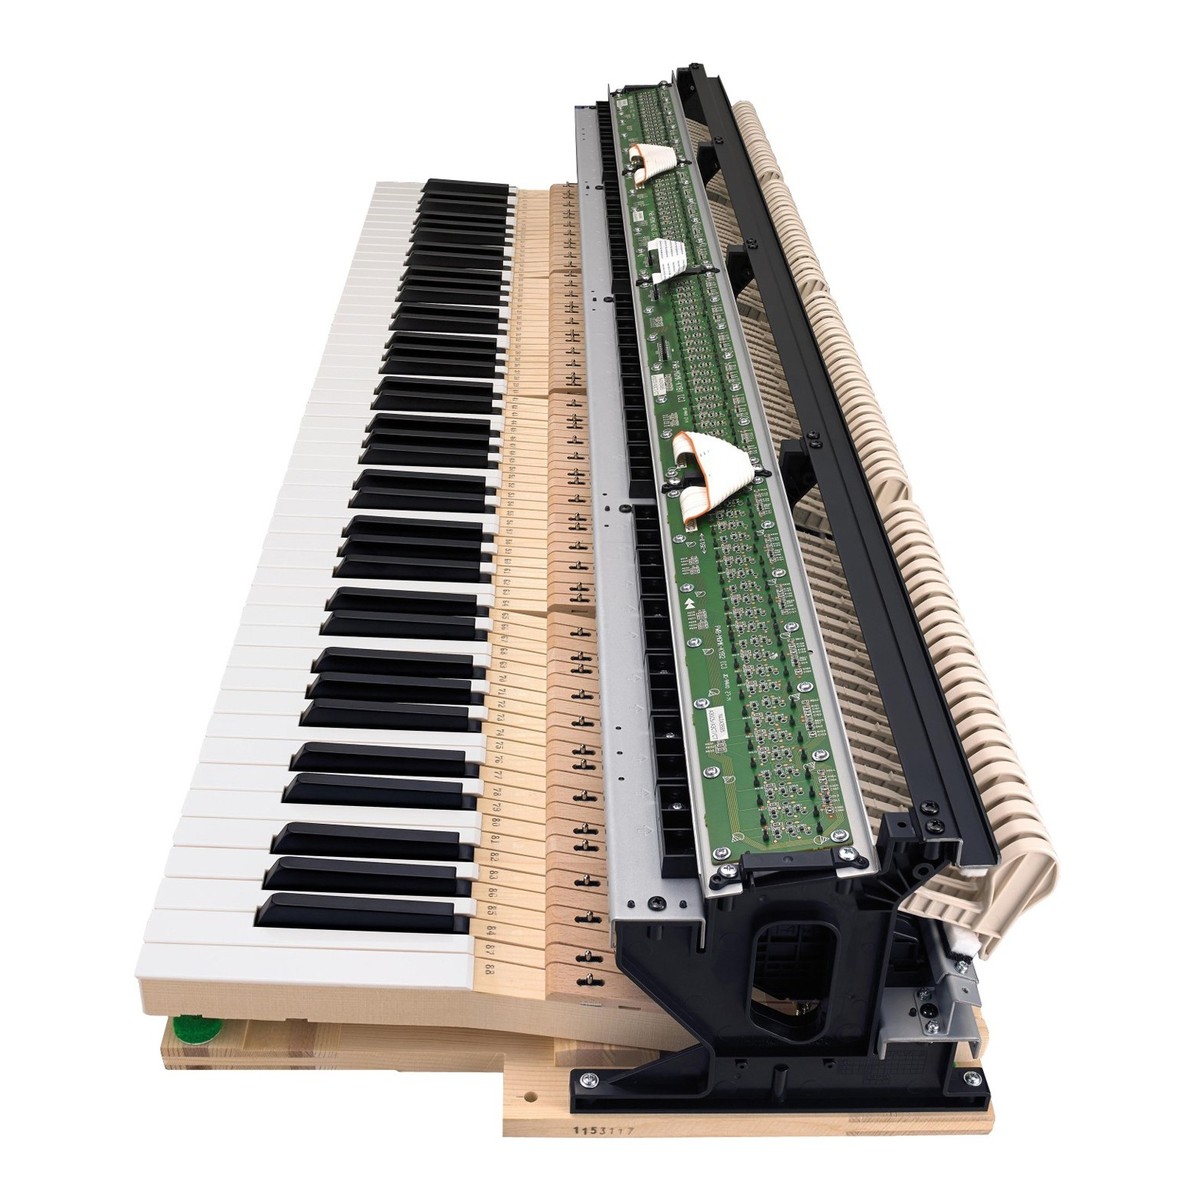 Casio GP-300BK Grand Hybrid Piano key cross section